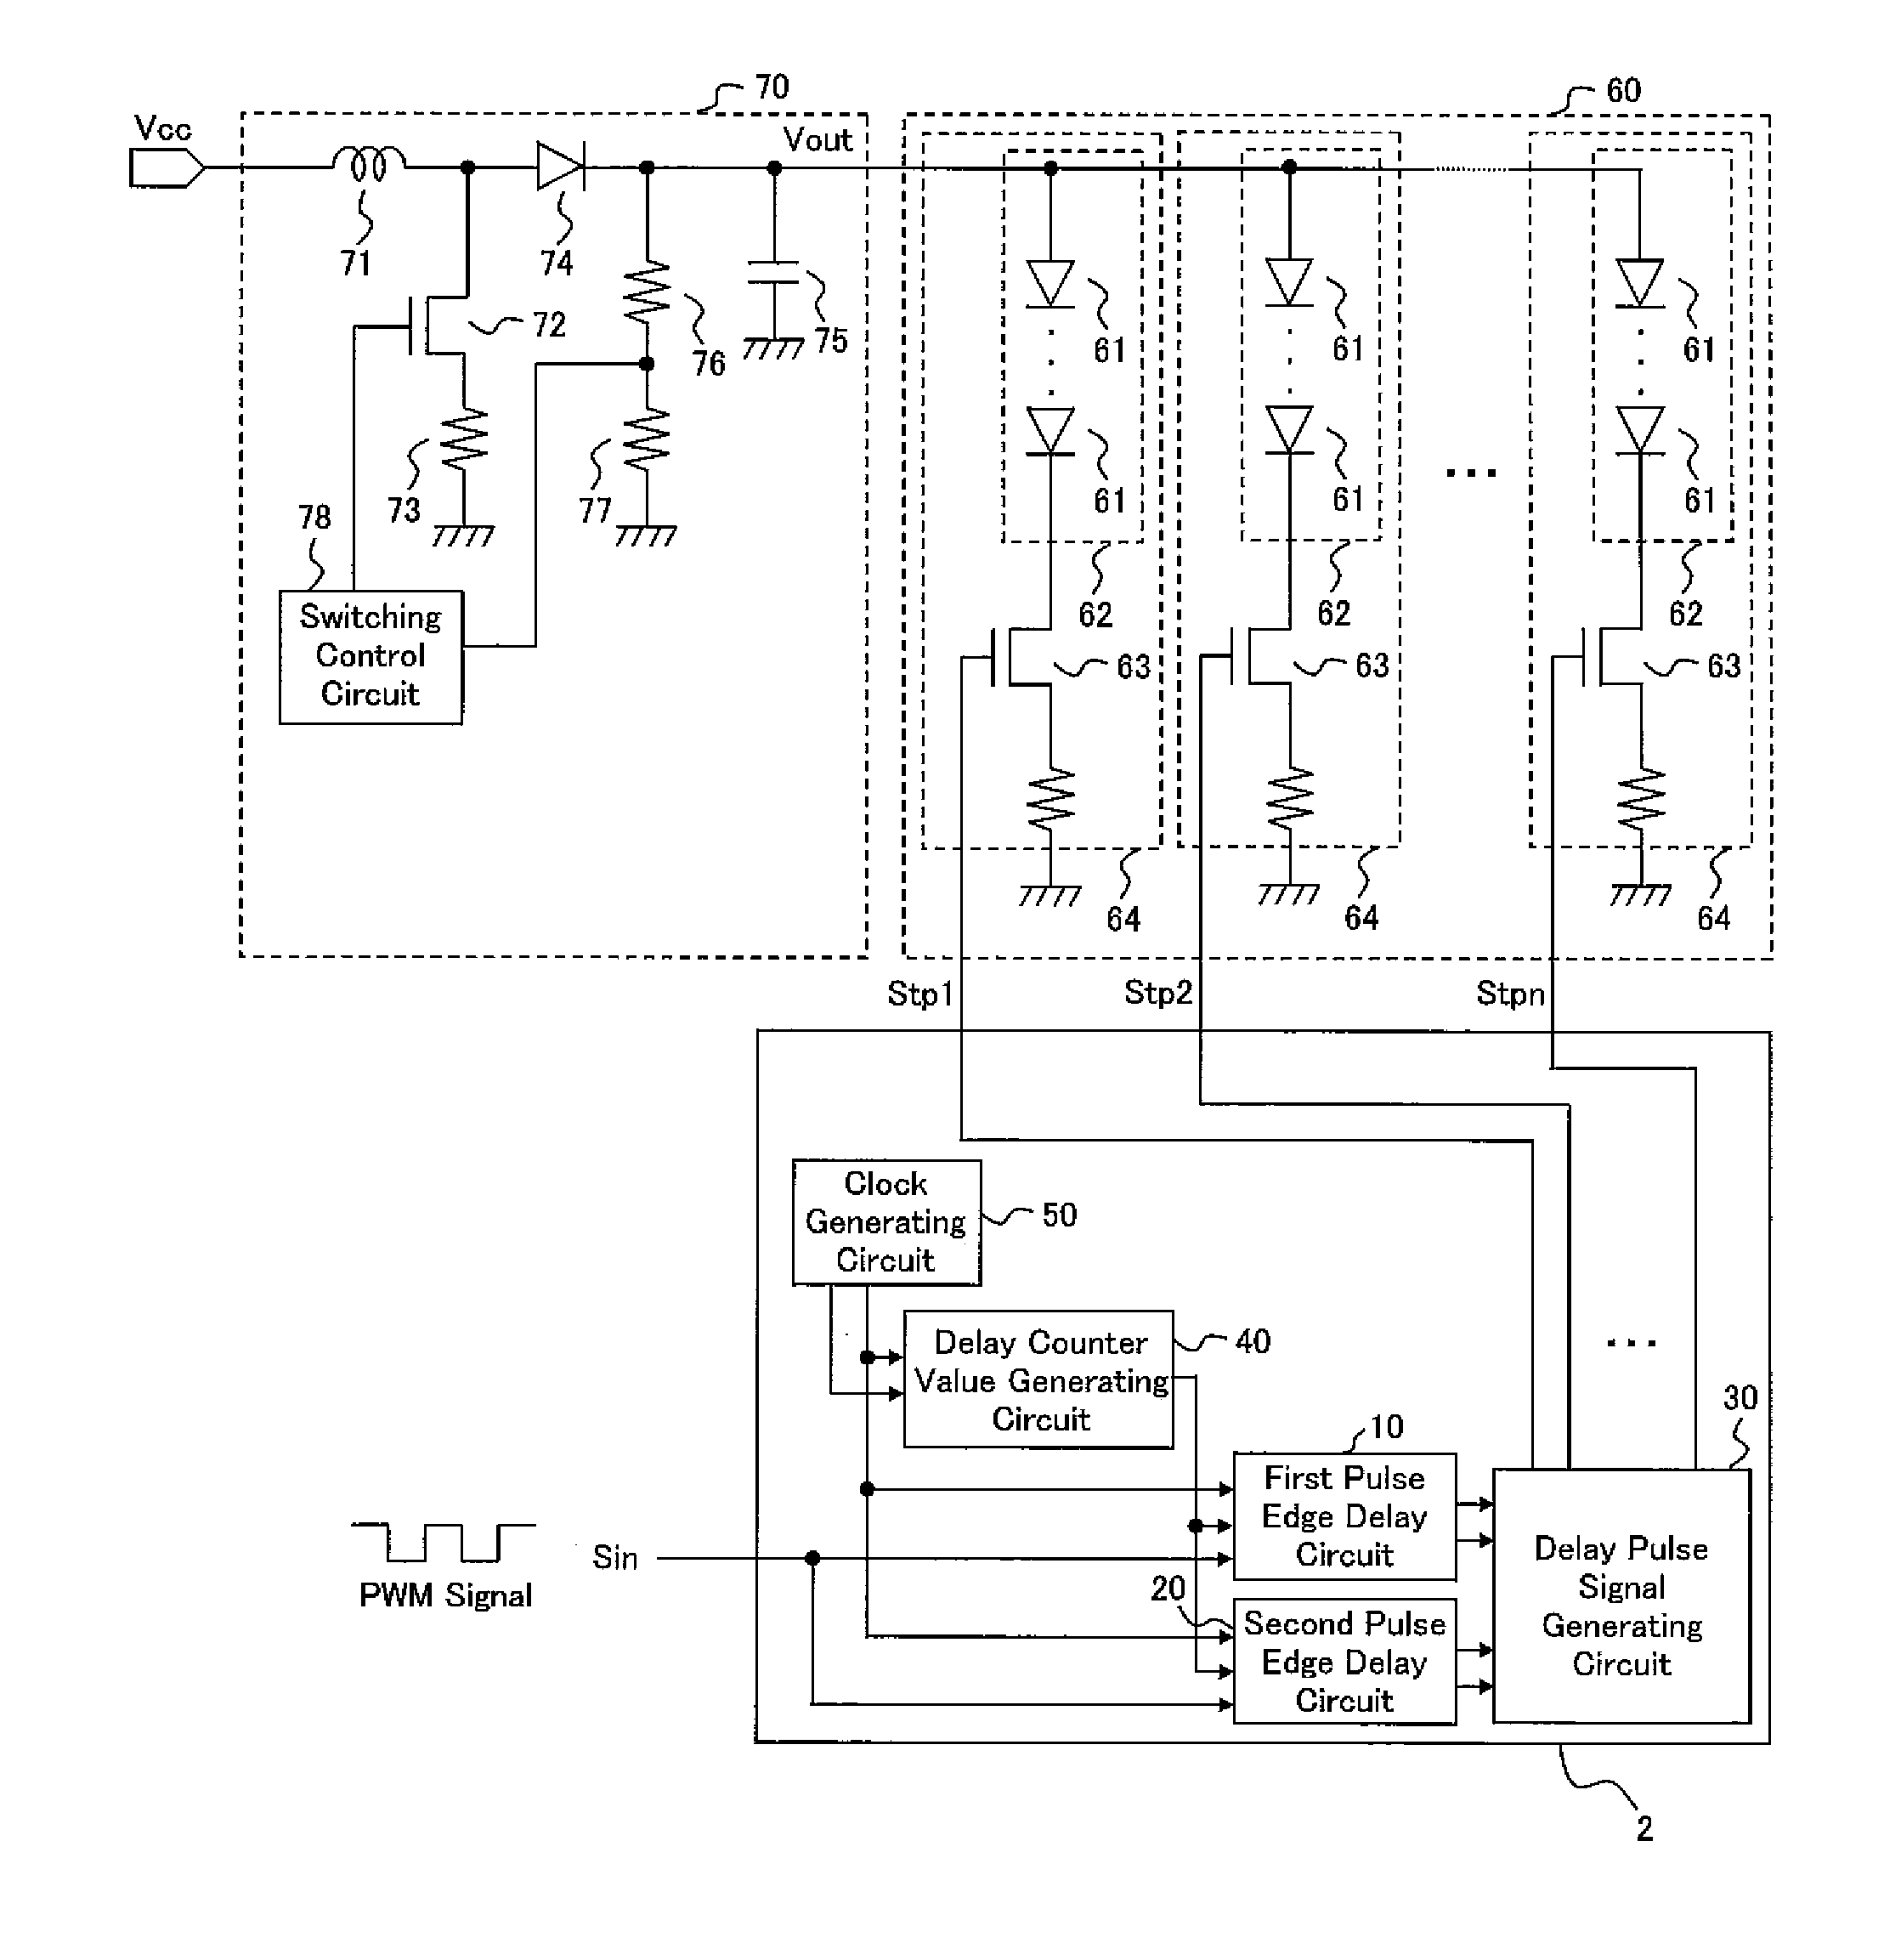 Pulse signal delay circuit and LED drive circuit